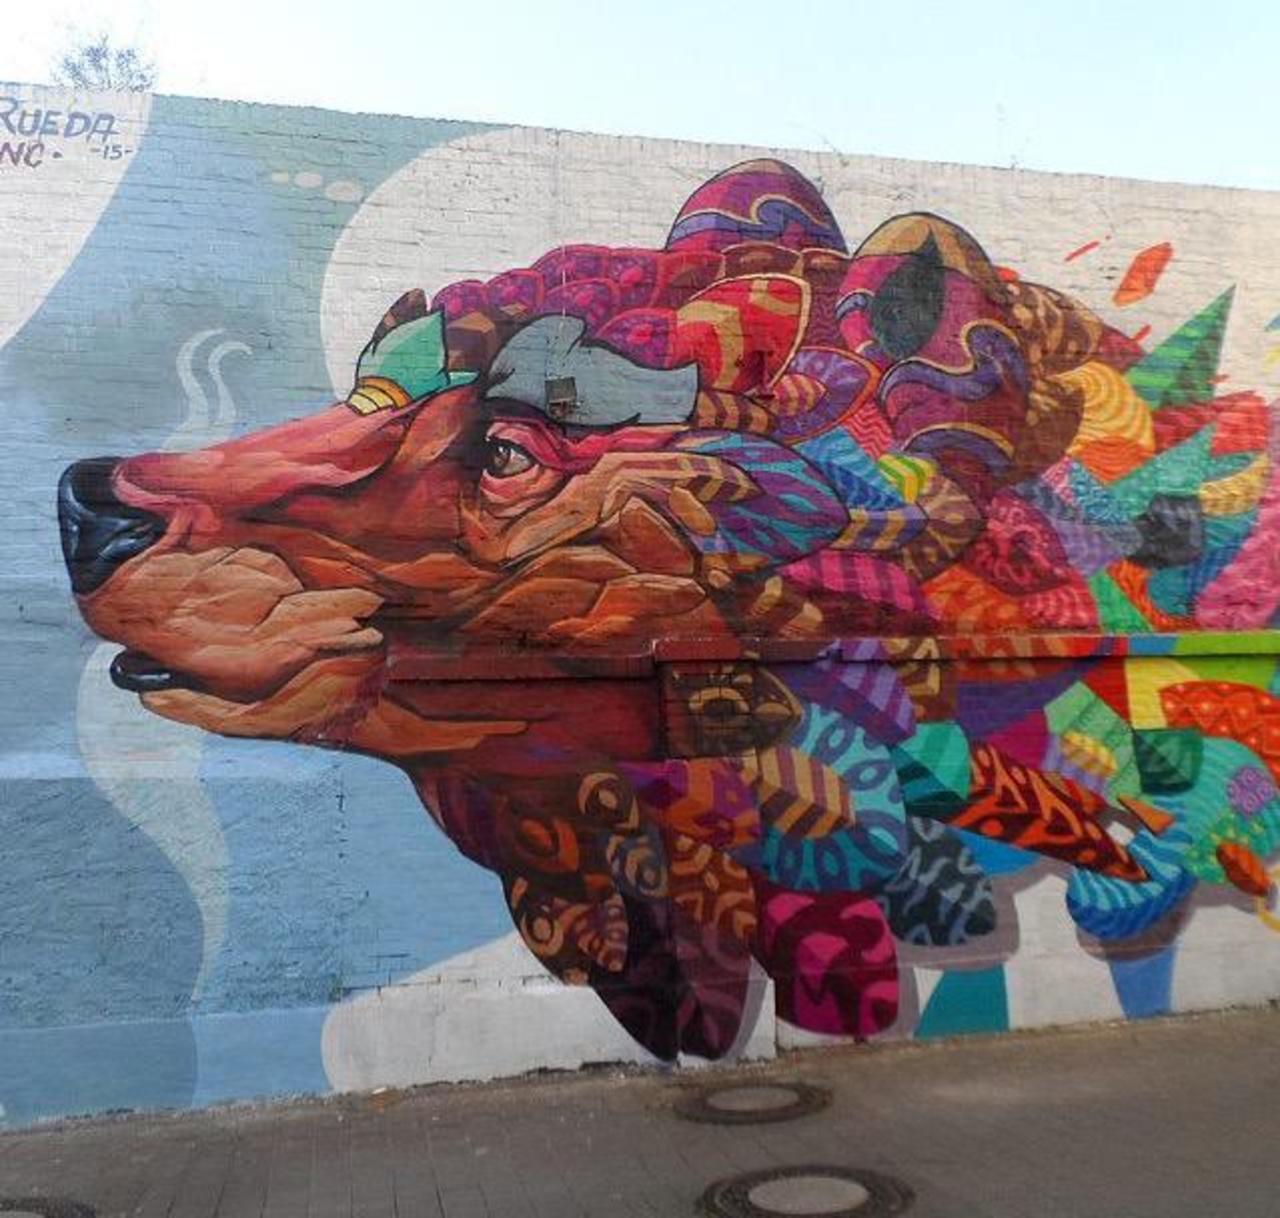 RT ArchaicManor "Farid Rueda Street Art 

#art #graffiti #mural #streetart http://t.co/4GKeWVoeKA yo"